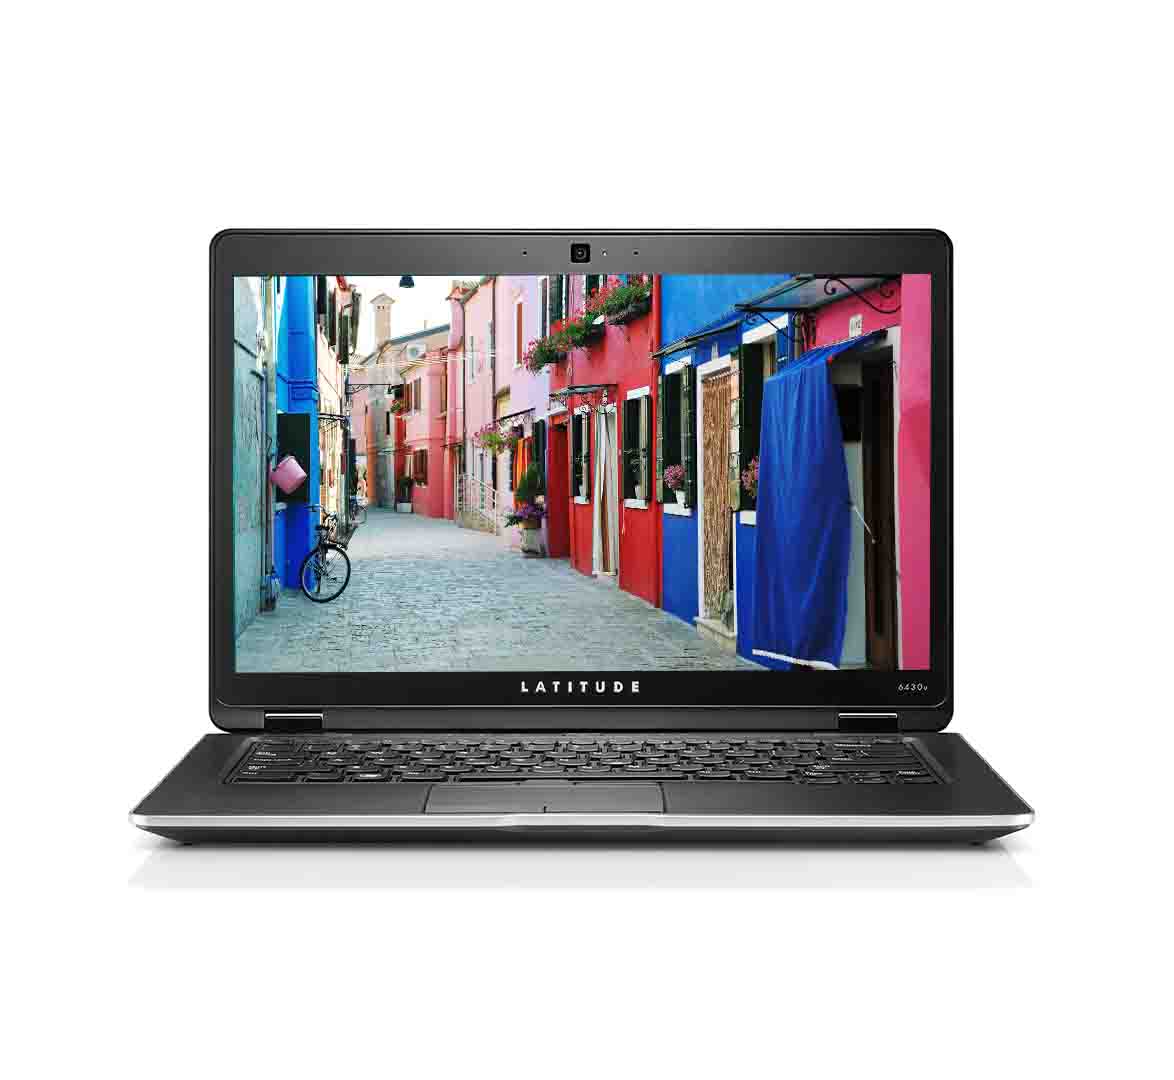 Dell Latitude 6430s Business Laptop, Intel Core i7-3rd Generation CPU, 8GB RAM, 500GB HDD, 14.1 inch Display, Windows 10 Pro, Refurbished Laptop